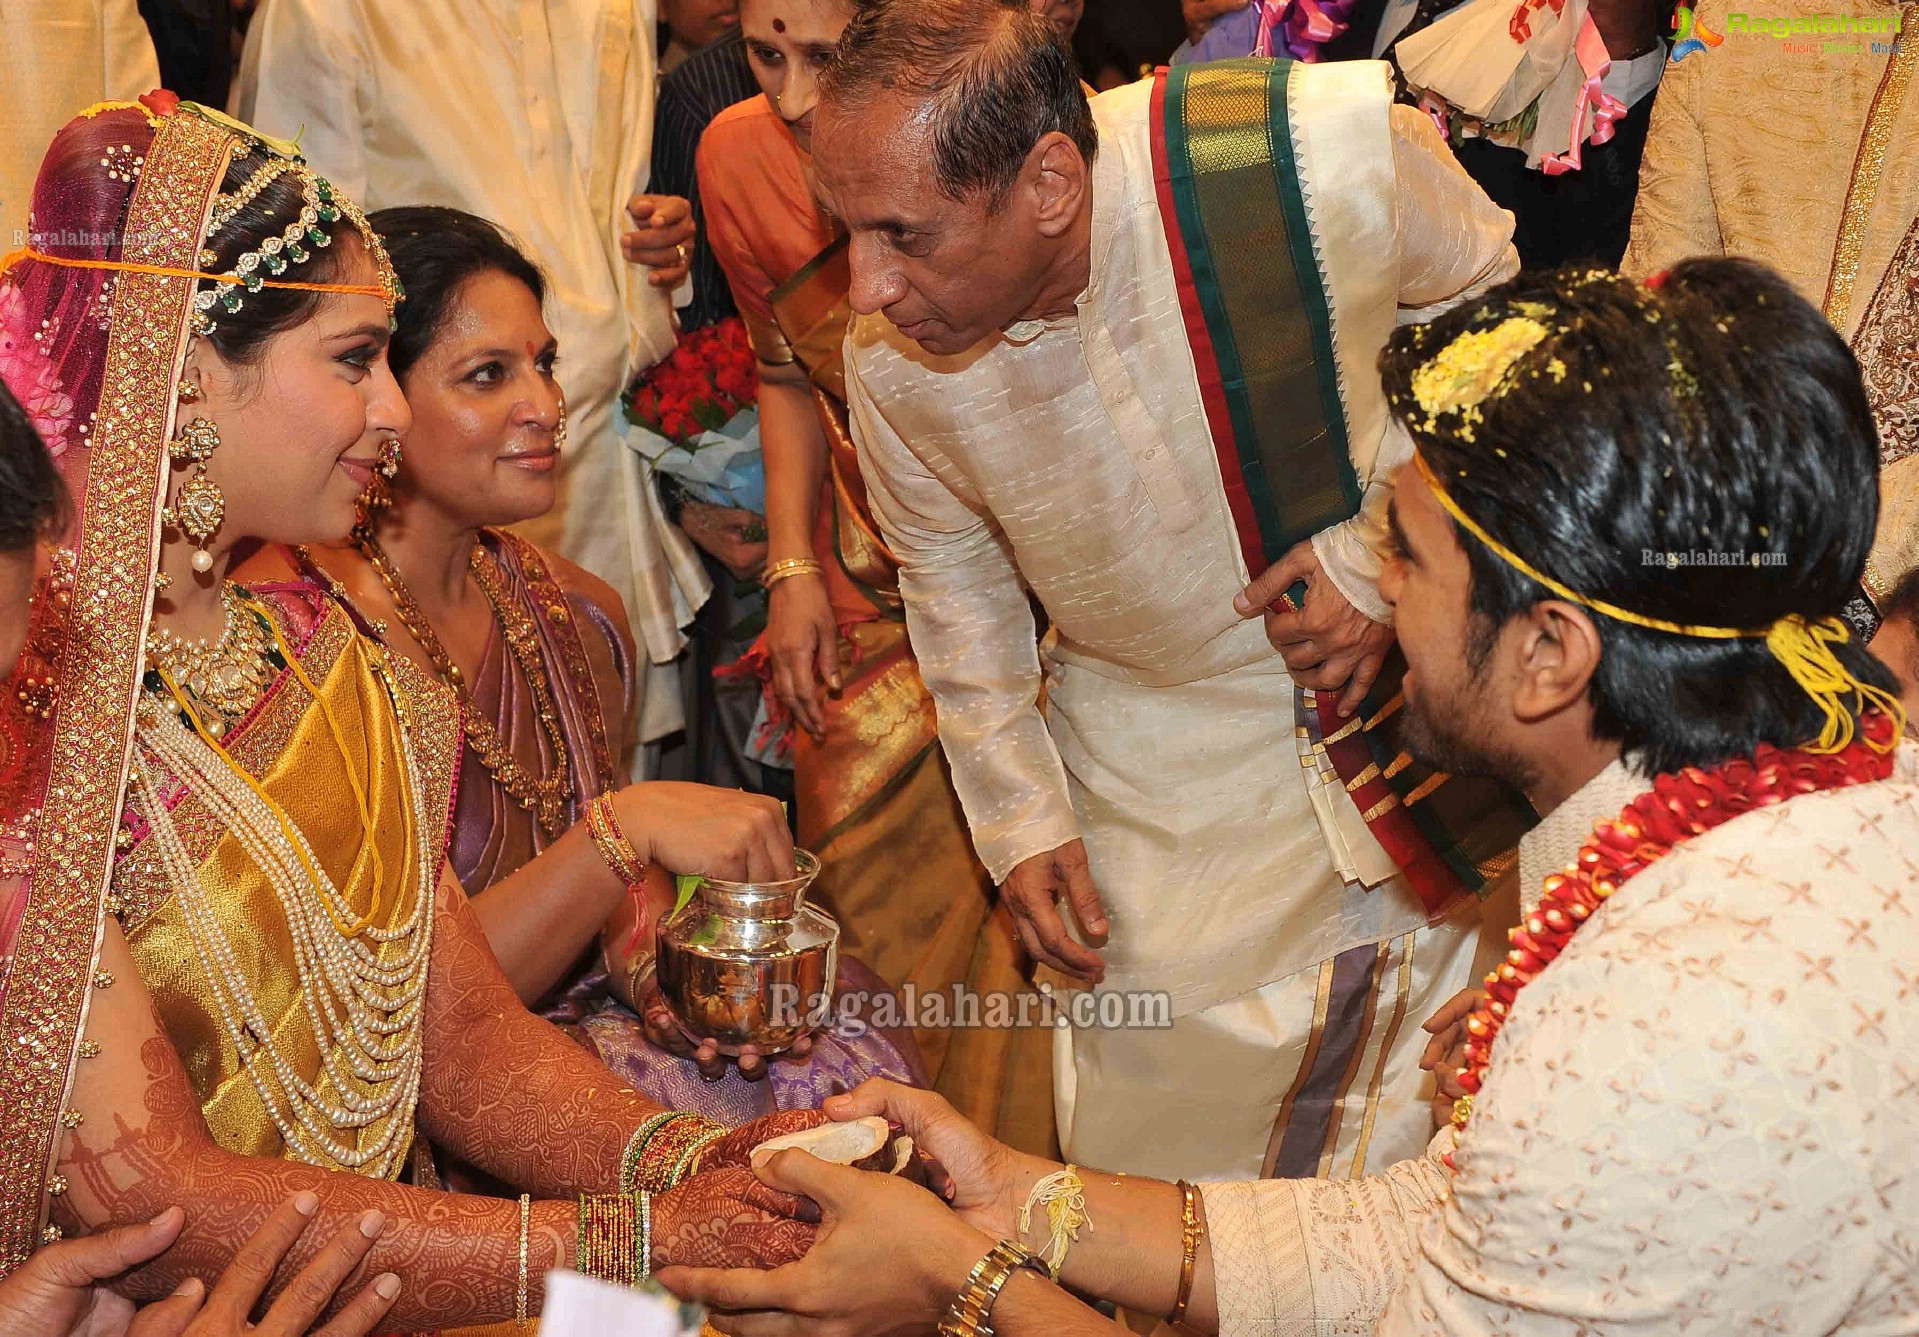 Ram Charan - Upasana Wedding Photos [HD]